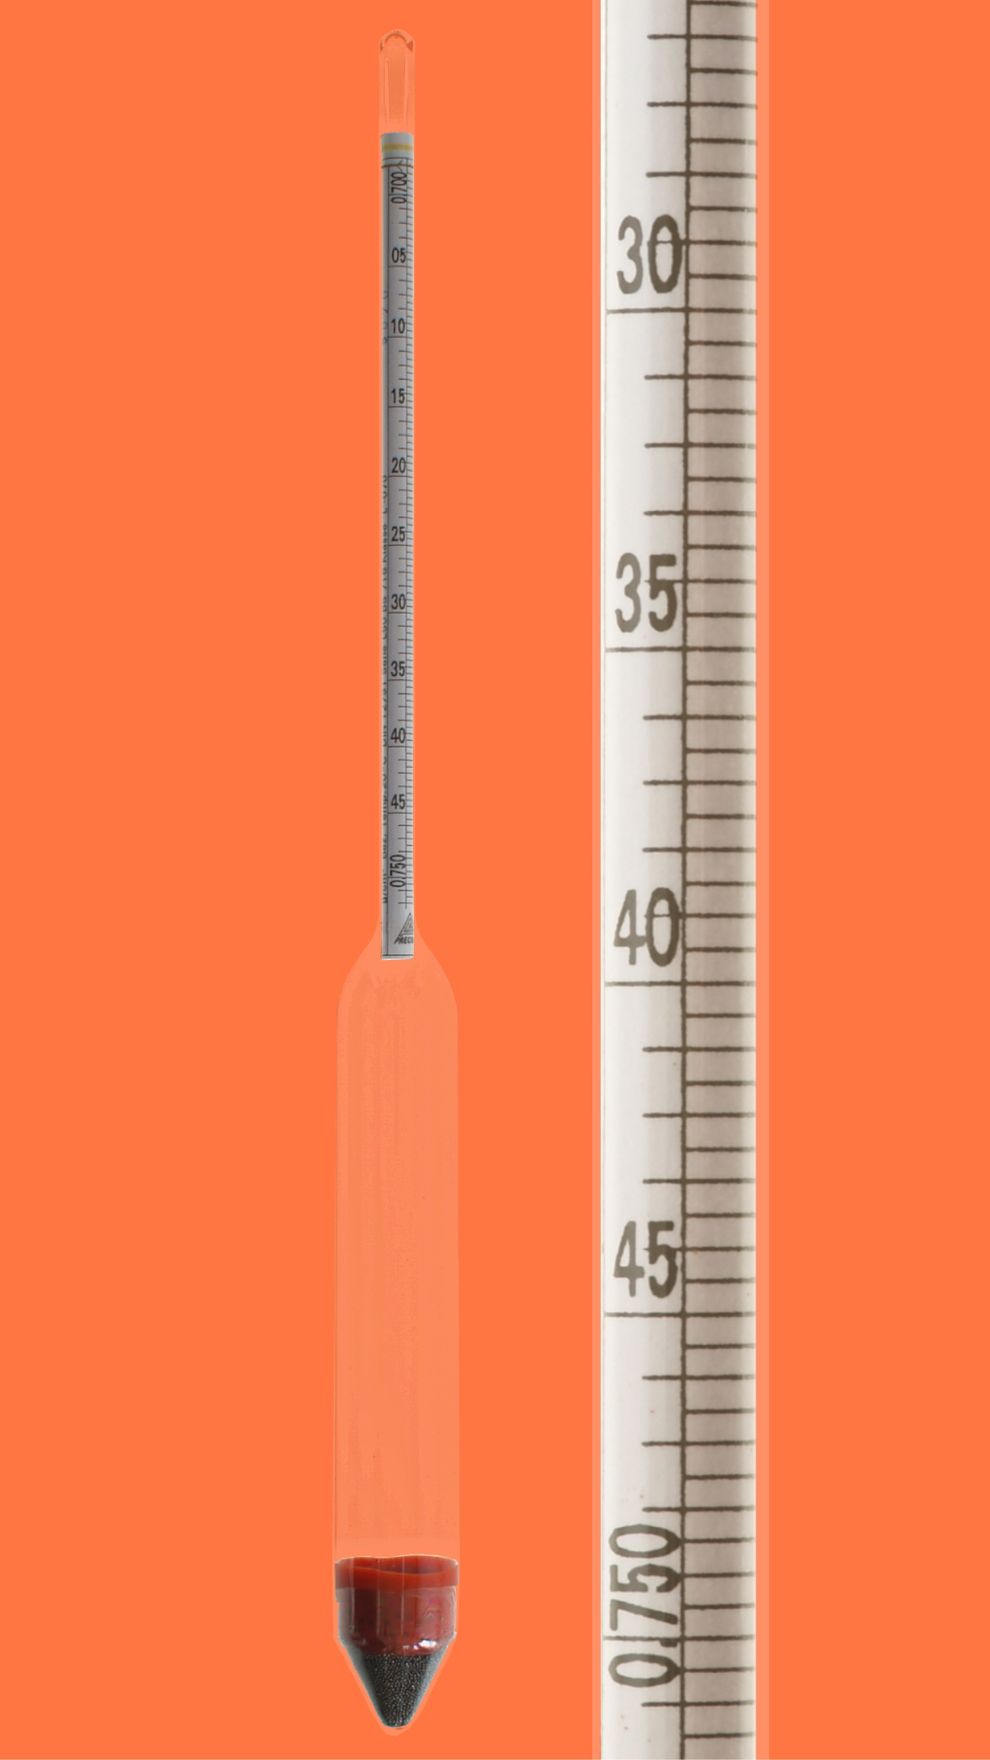 Aräometer, DIN 12791, L50, 0,60-0,65:0,0005g/cm³, Bezugstemp. 20°C, ohne Thermometer